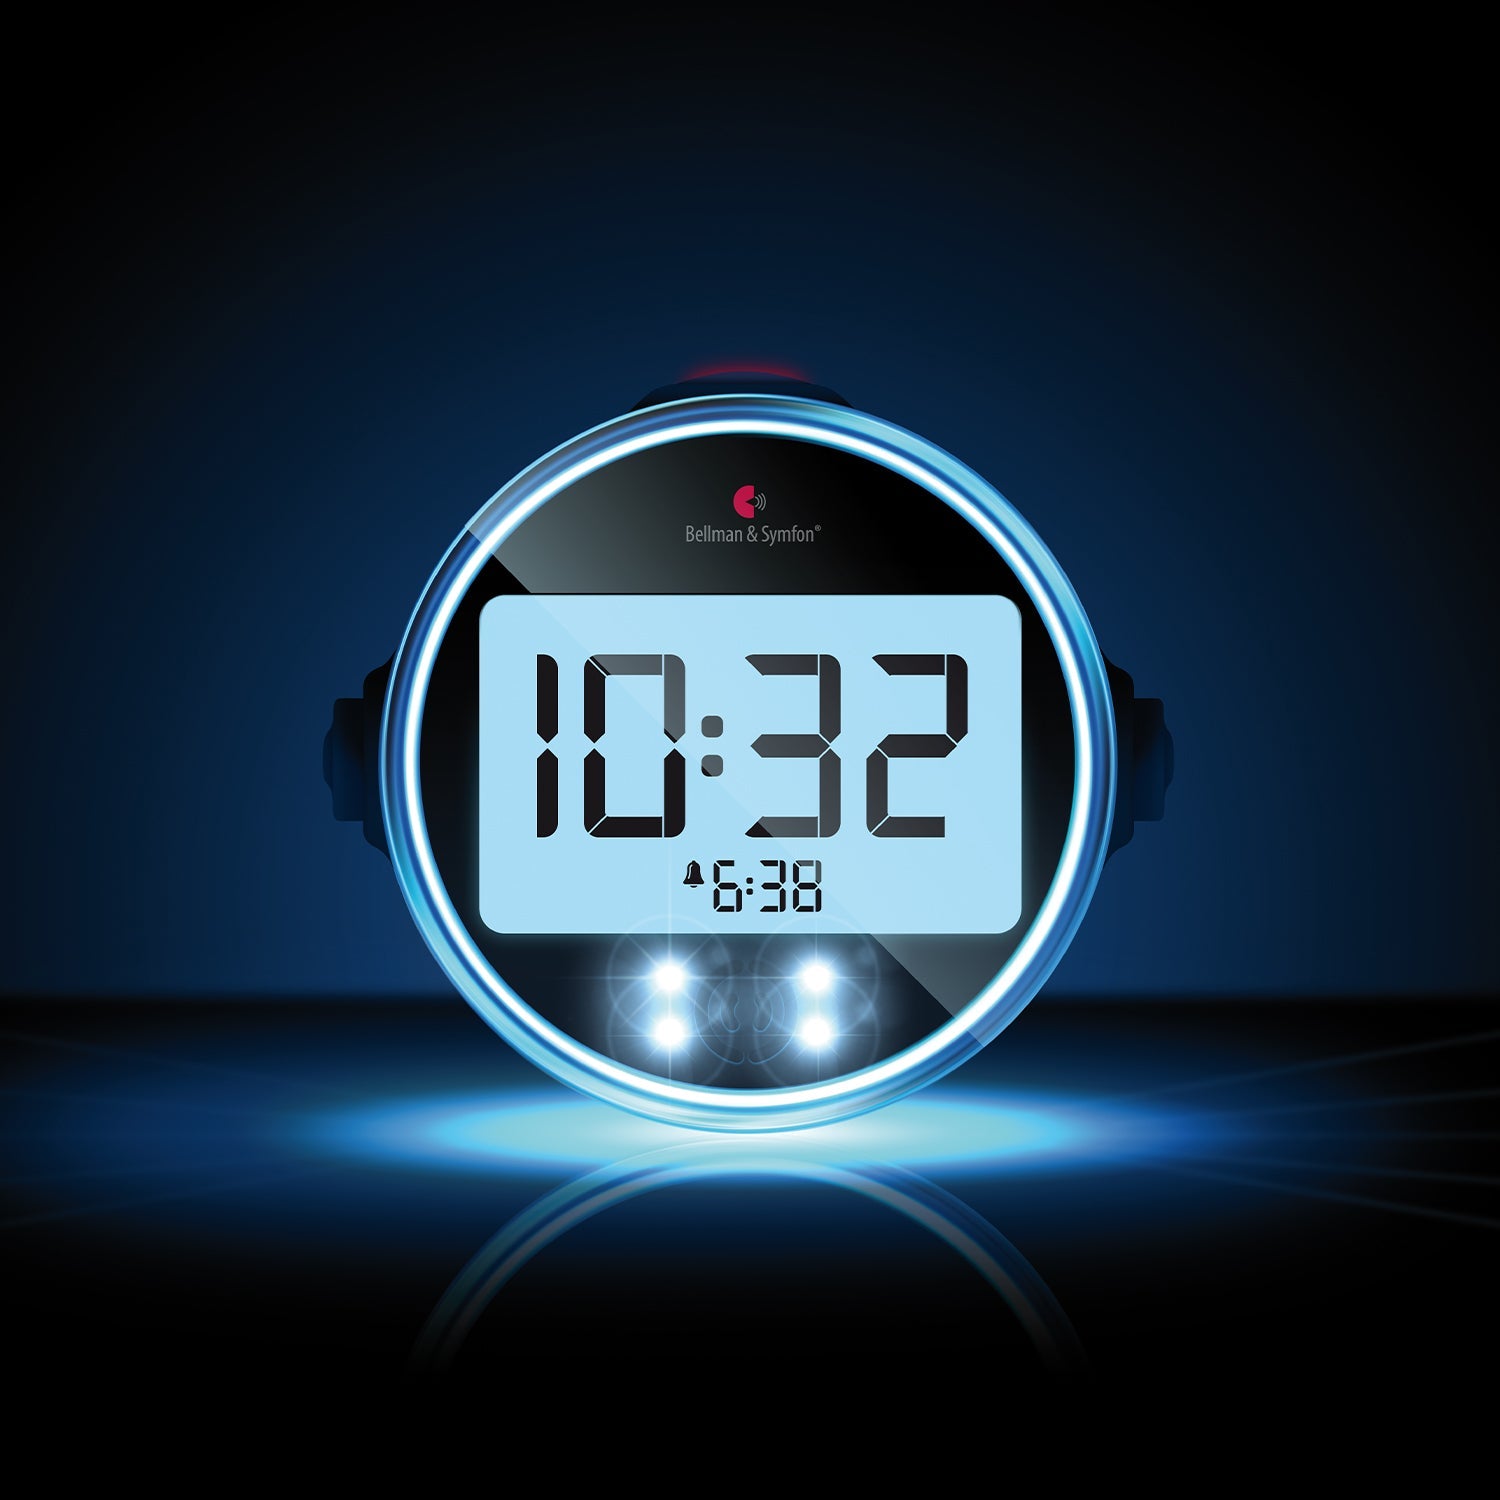 ADA Alarm Clock Pro | Bellman & Symfon